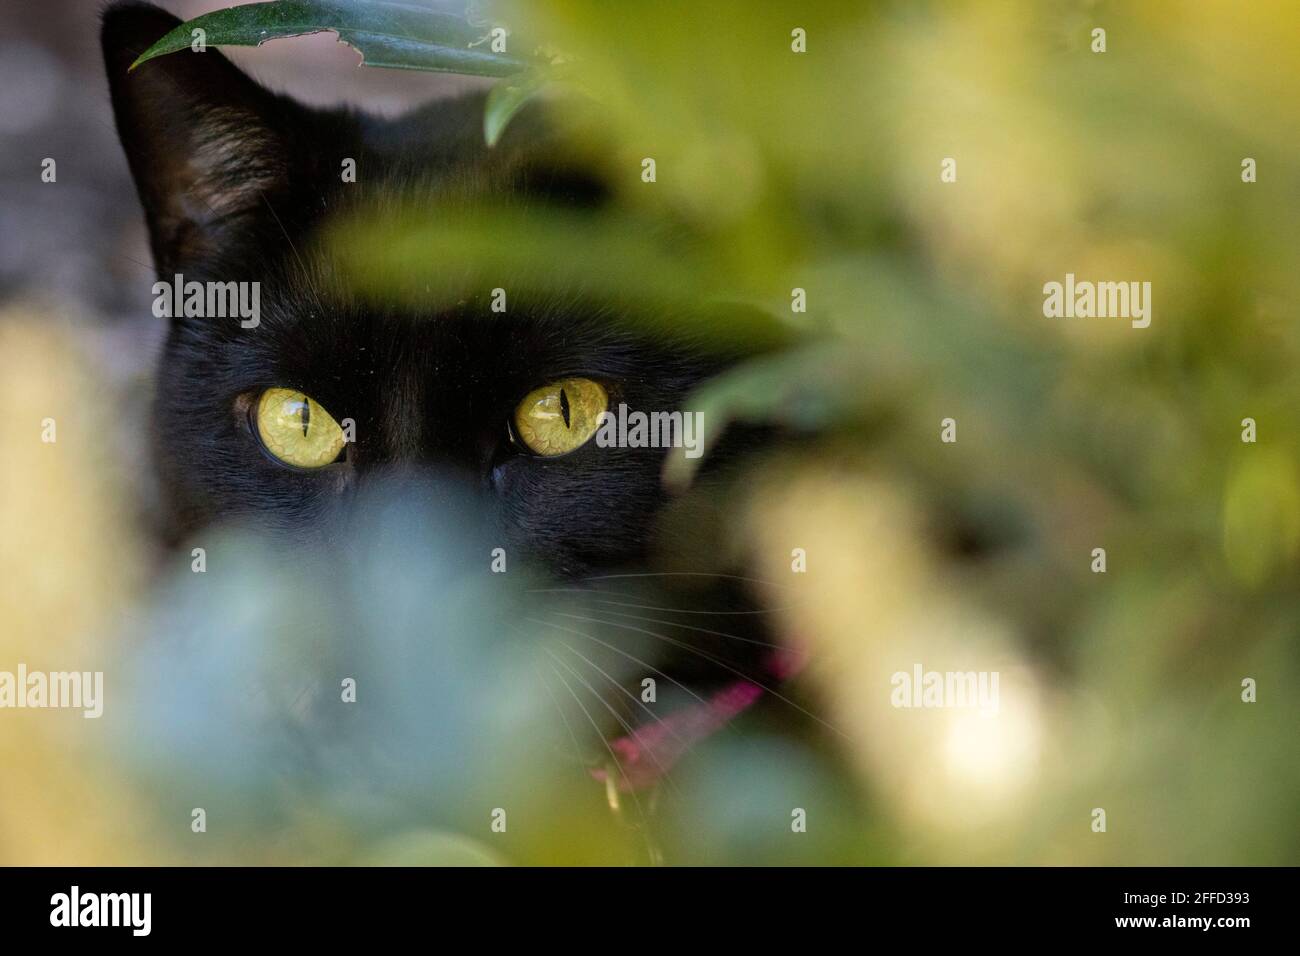 Black cat with yellow eyes peeking between leaves - Brevard, North Carolina, USA Stock Photo